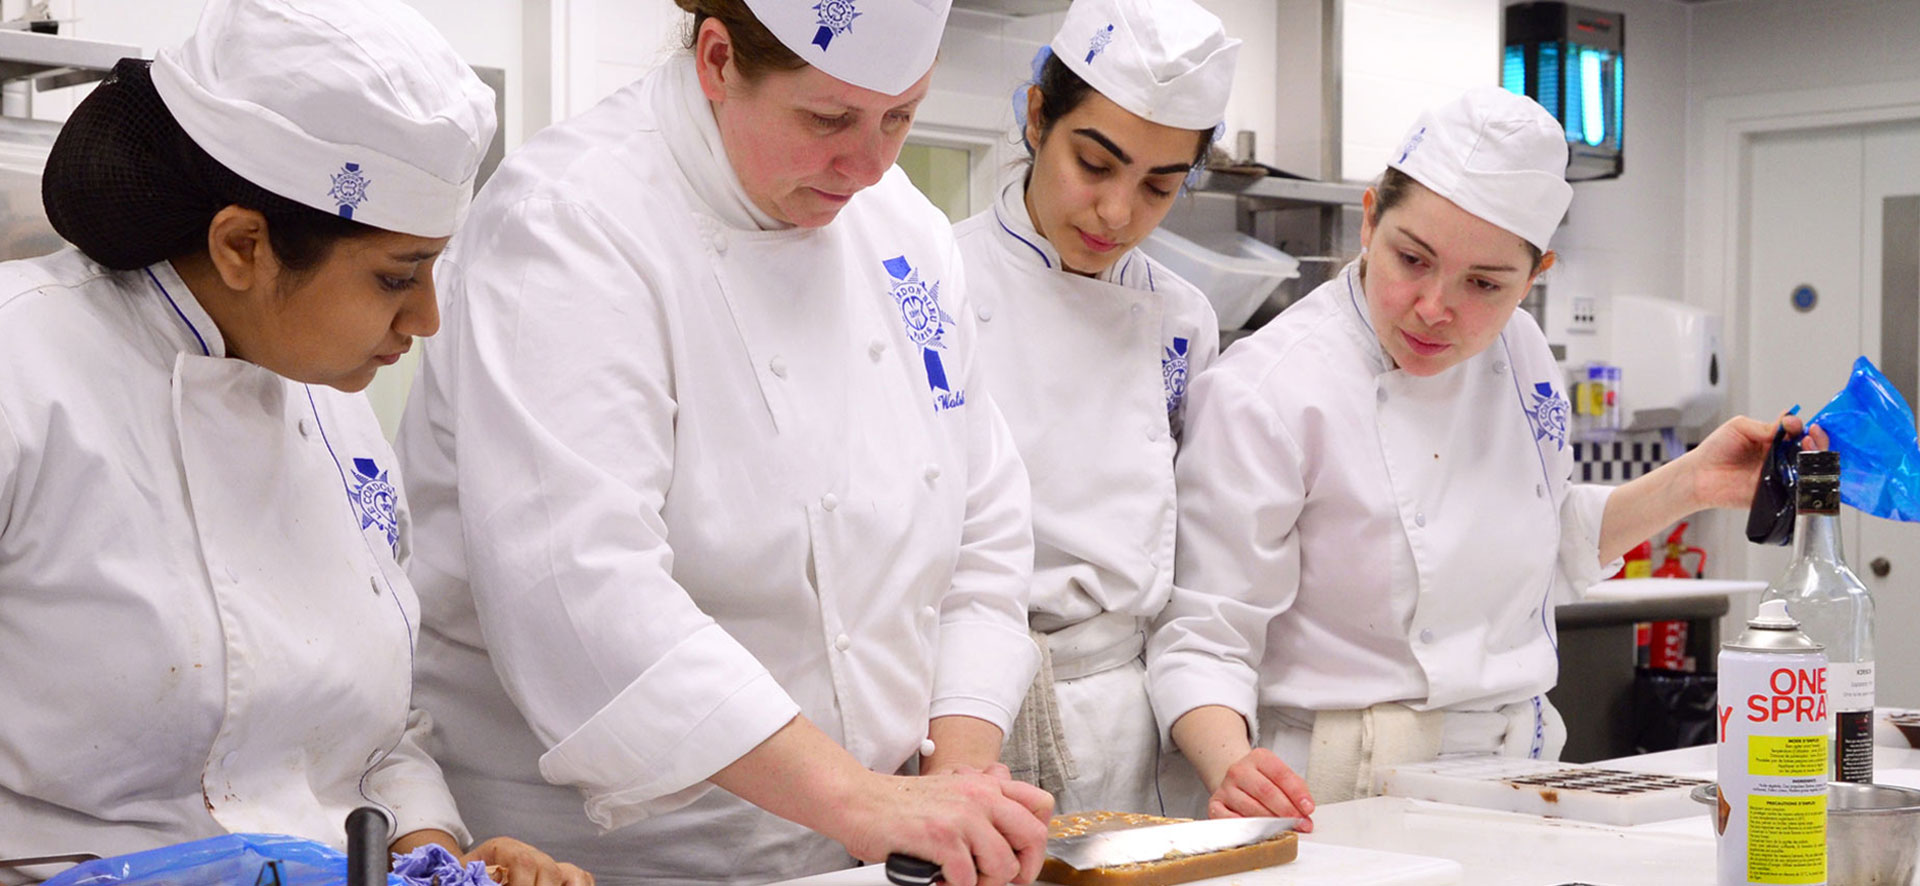 Le Cordon Bleu explain how to become a Pastry Chef